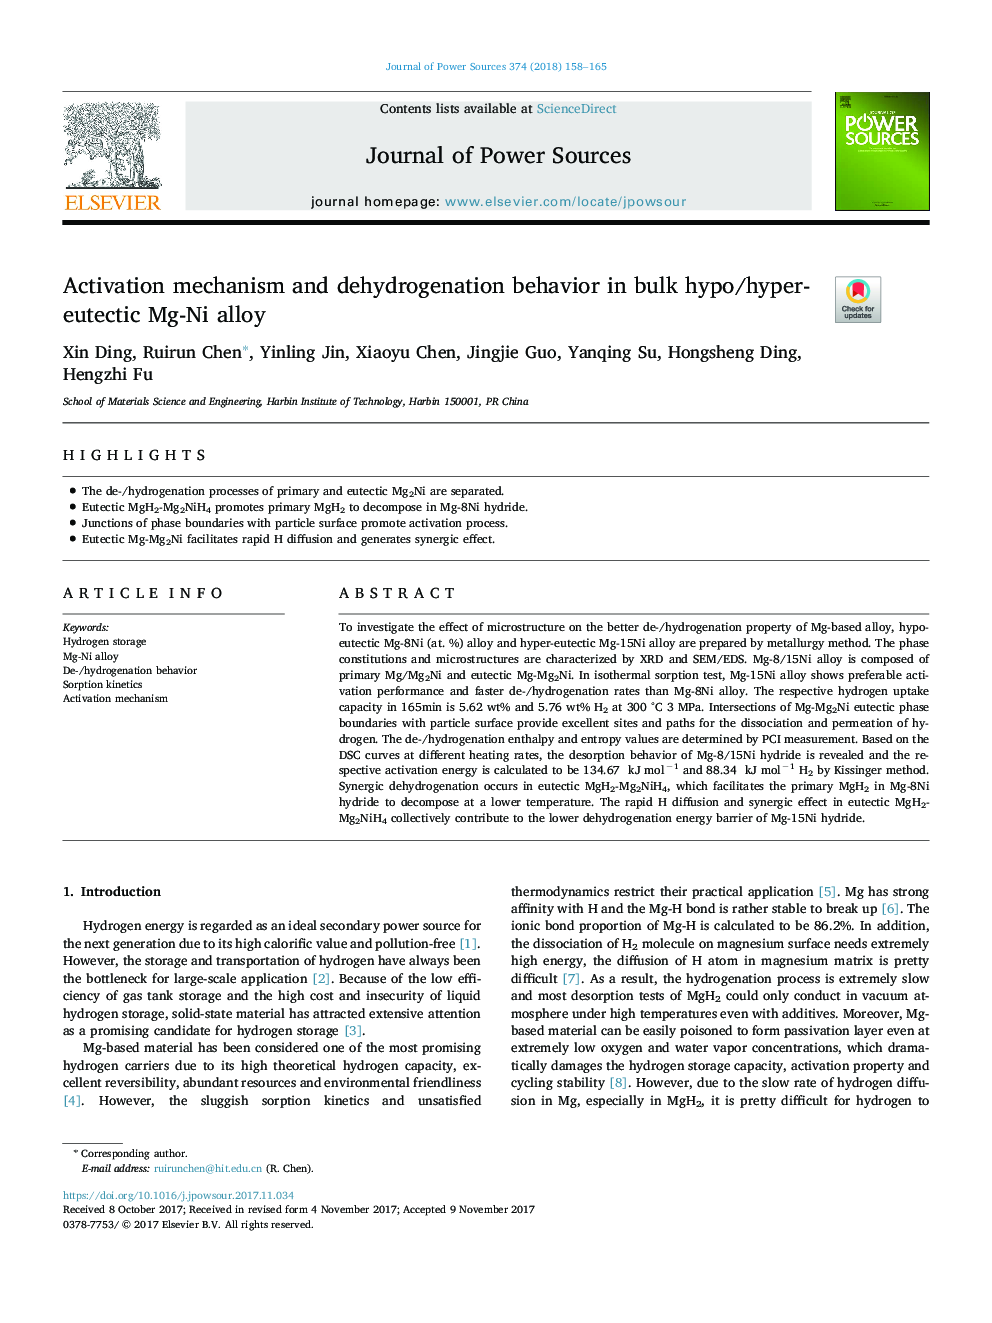 Activation mechanism and dehydrogenation behavior in bulk hypo/hyper-eutectic Mg-Ni alloy